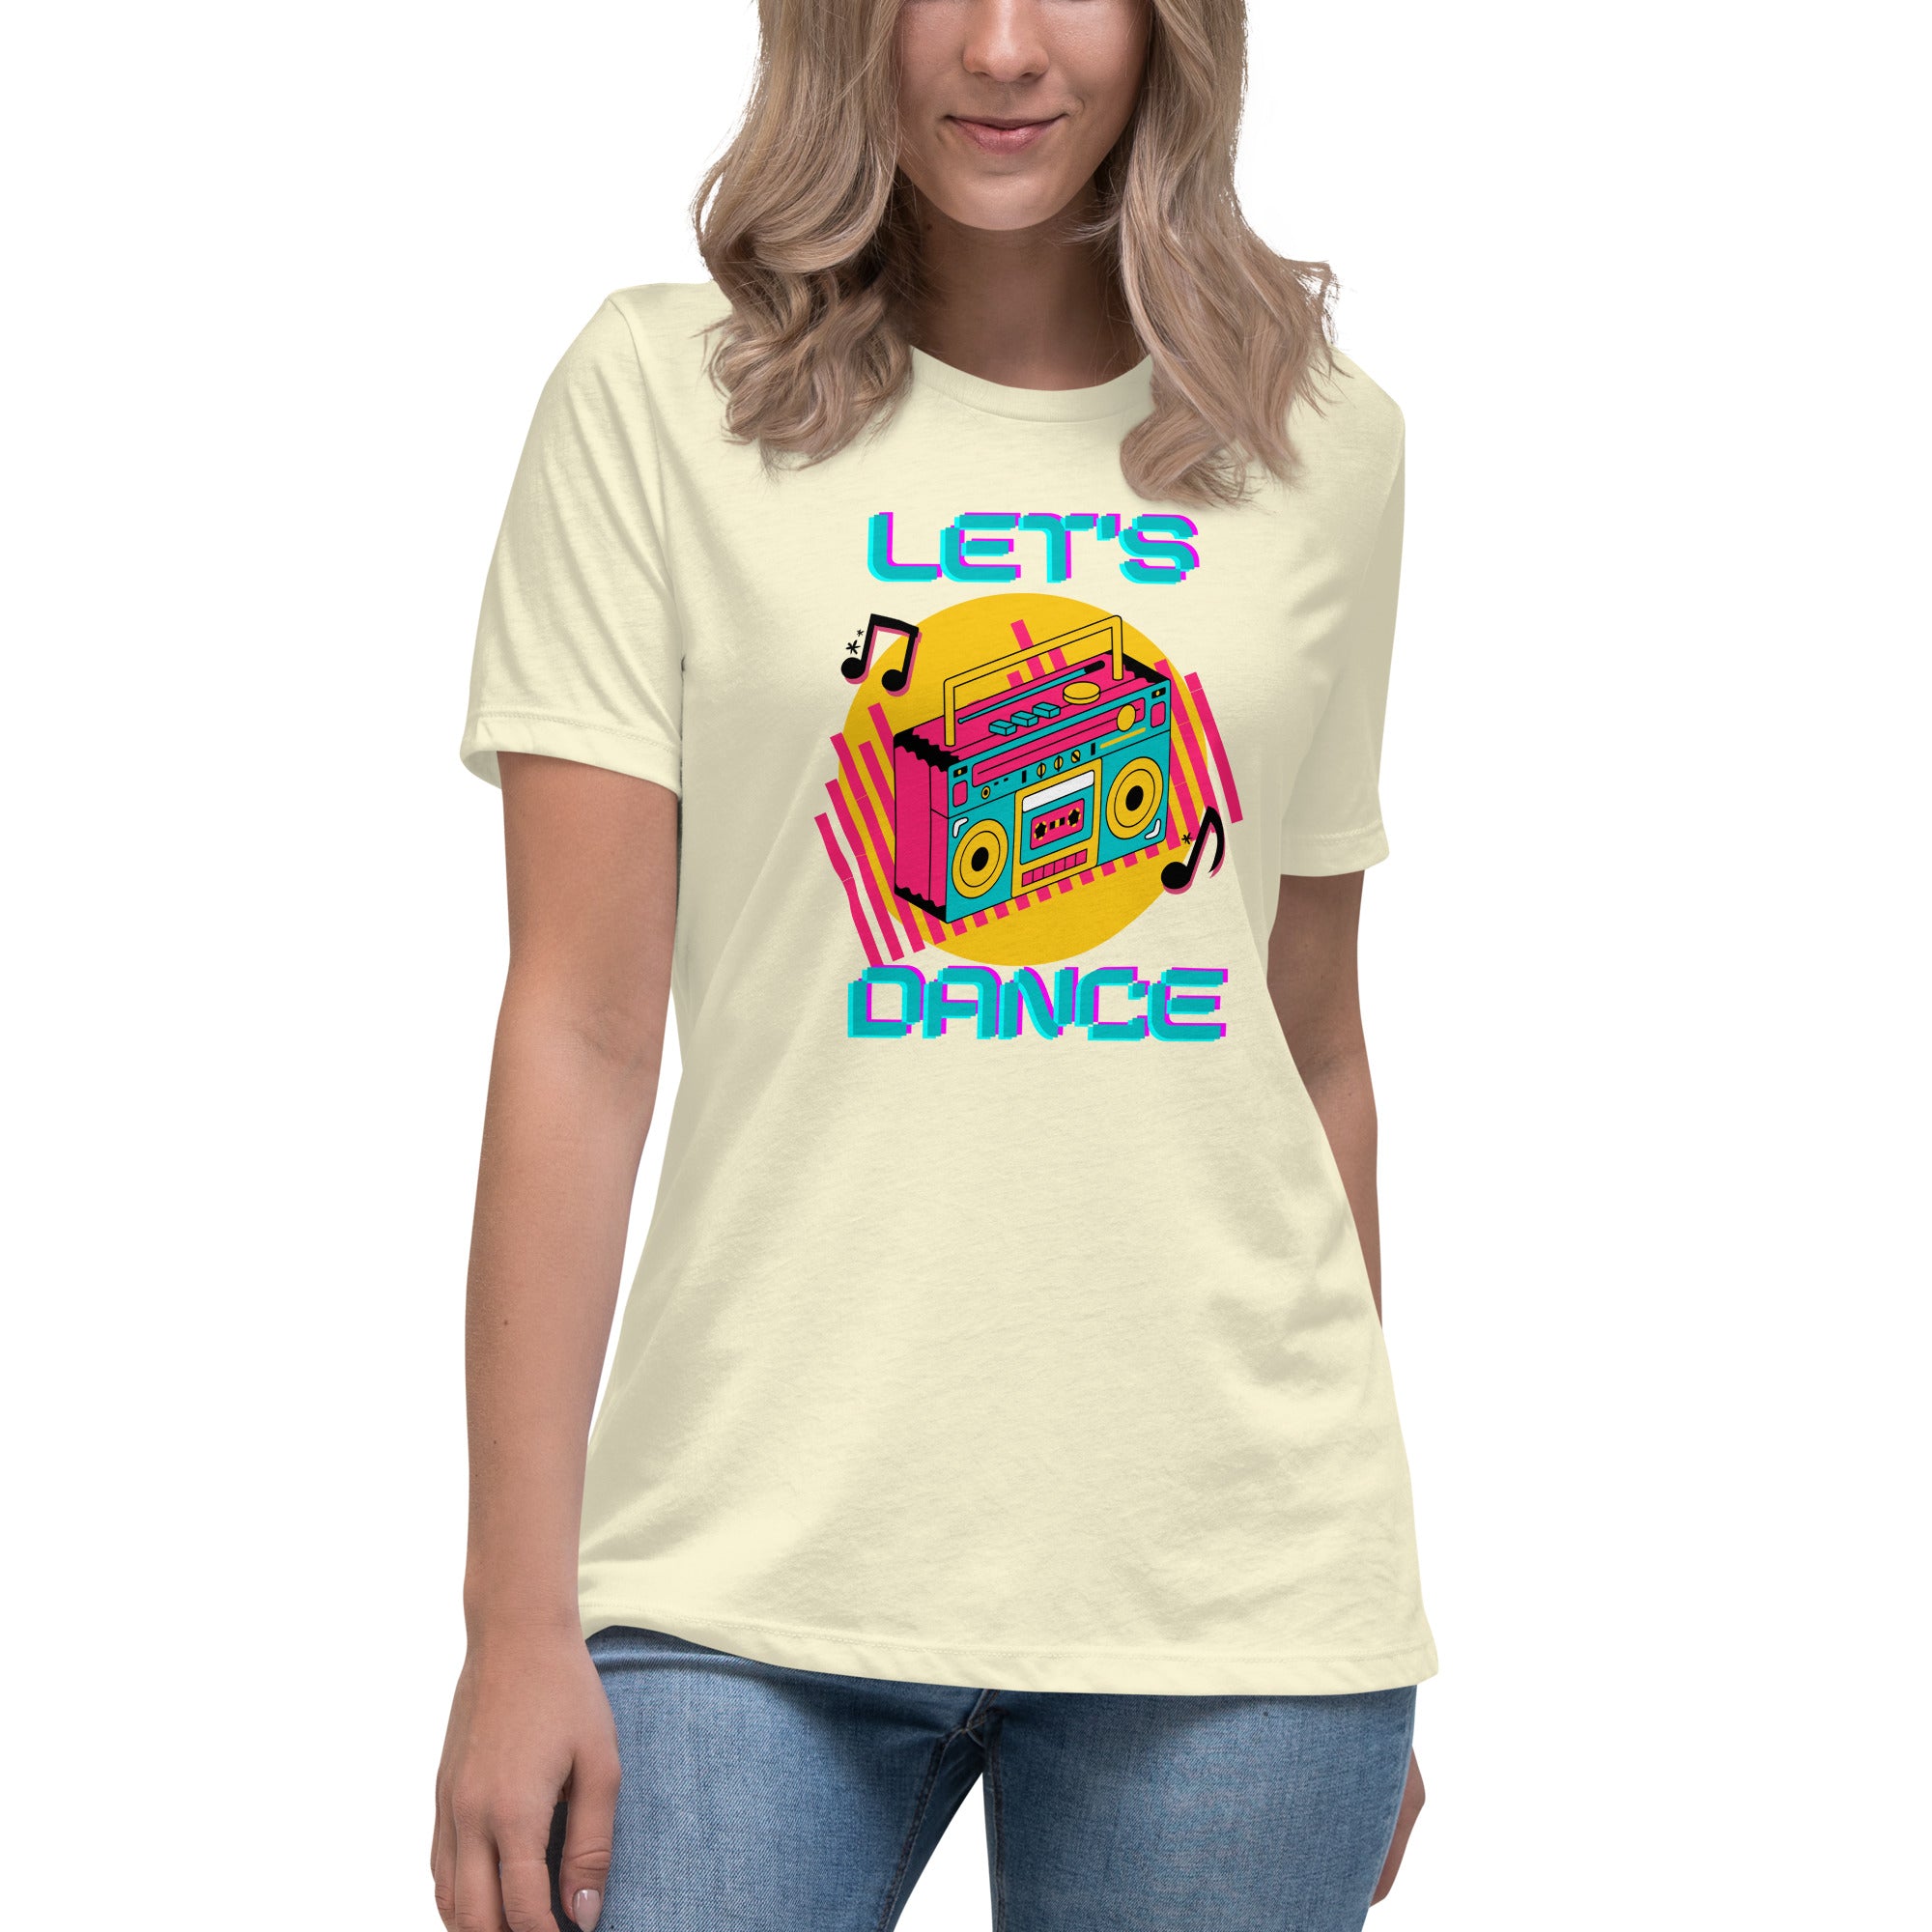 Let's Dance Women's Premium T-Shirt